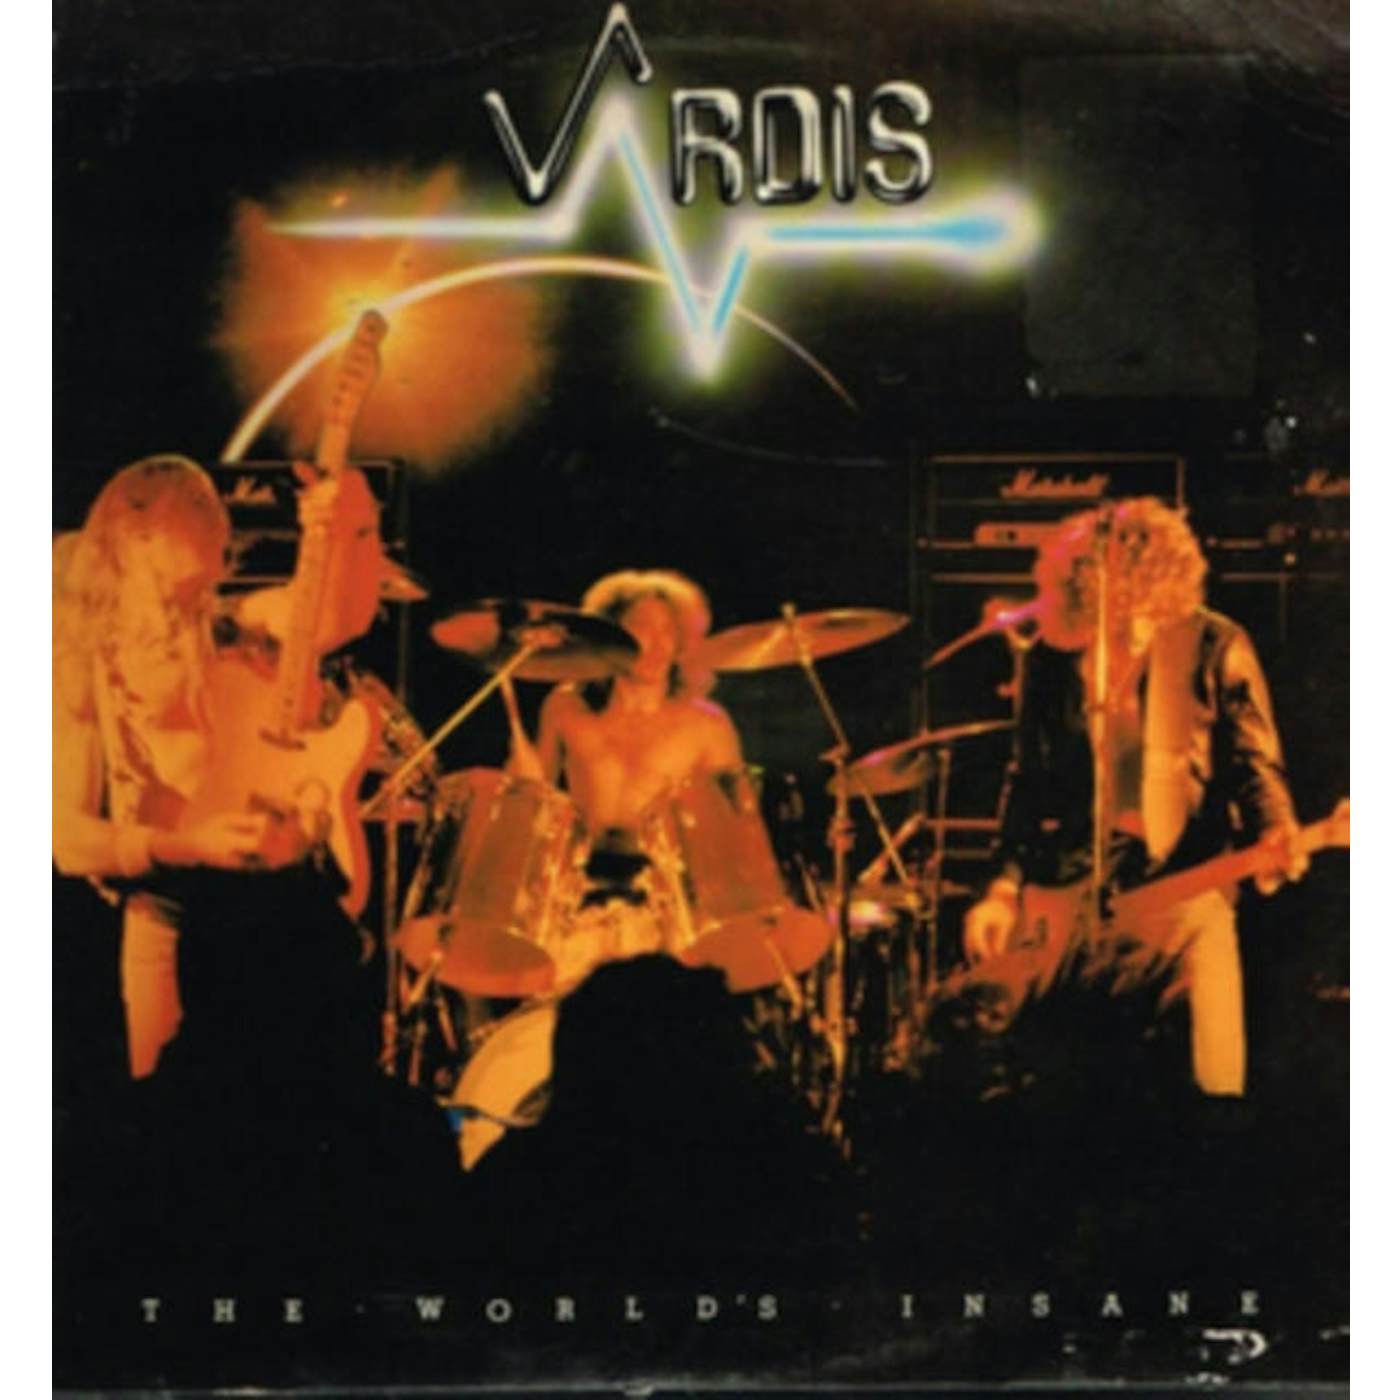 Vardis CD - The World’s Insane